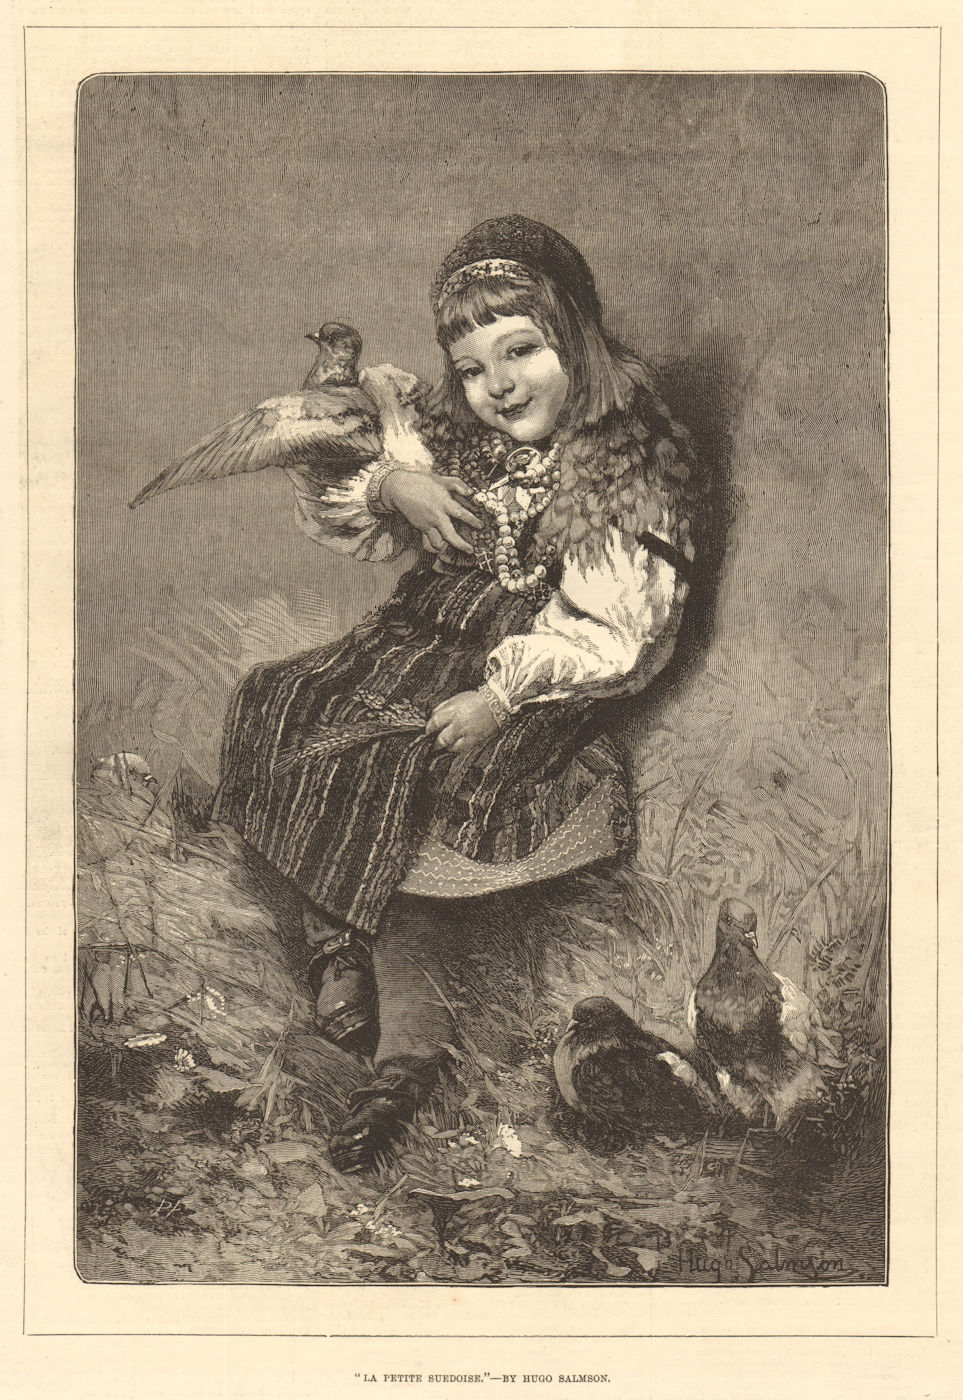 Associate Product " La petite Suedoise " - by Hugo Salmson. Sweden. Pigeons 1875 old print